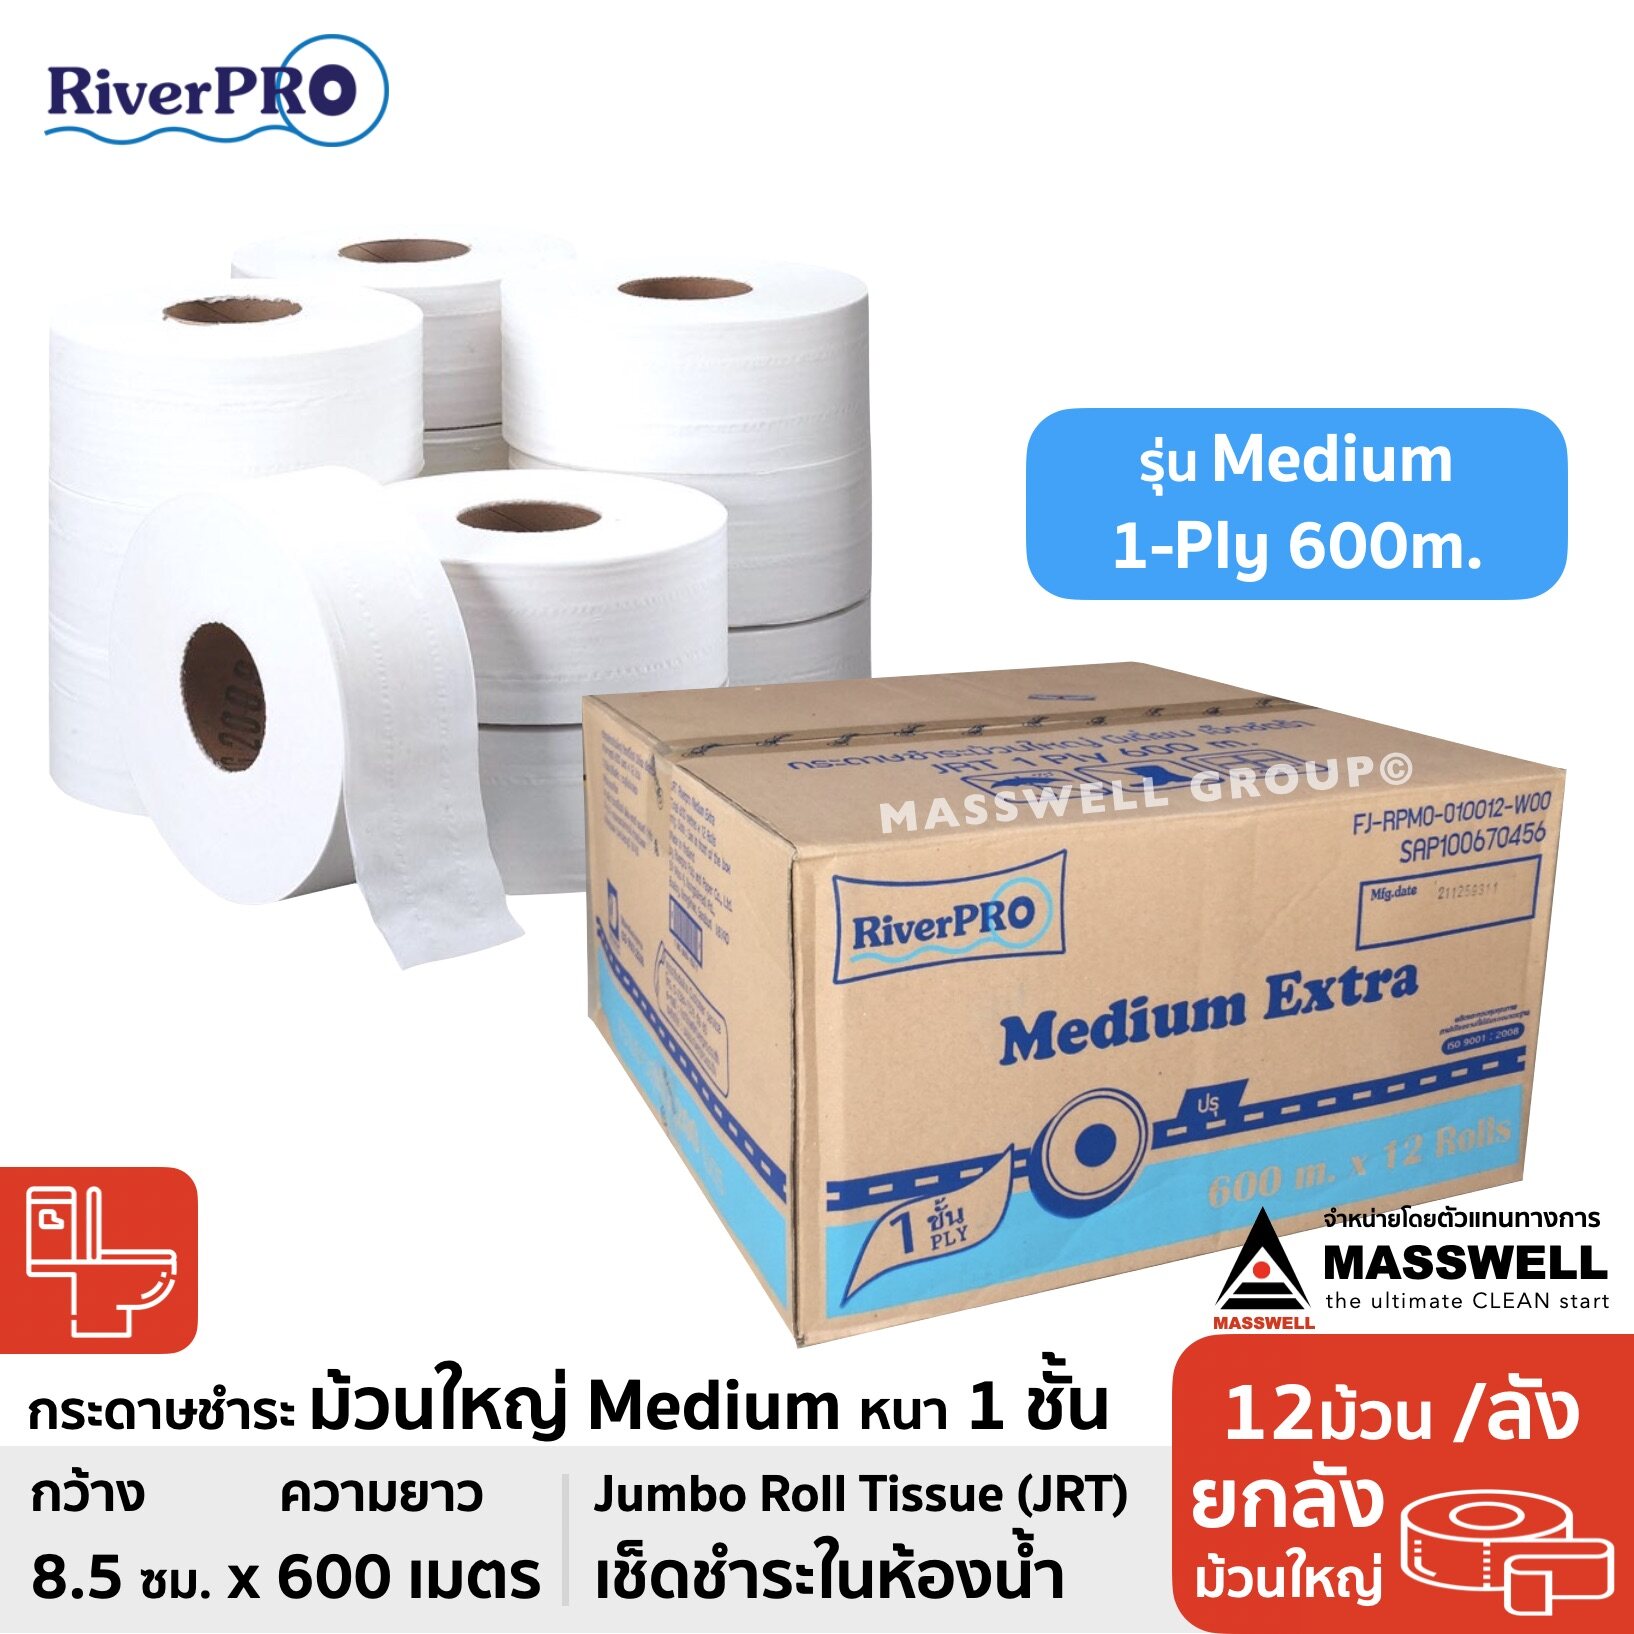 RiverPro กระดาษชำระม้วนใหญ่ JRT รุ่น MEDIUM 1-Ply 600เมตร (12ม้วน) ขายยกลัง